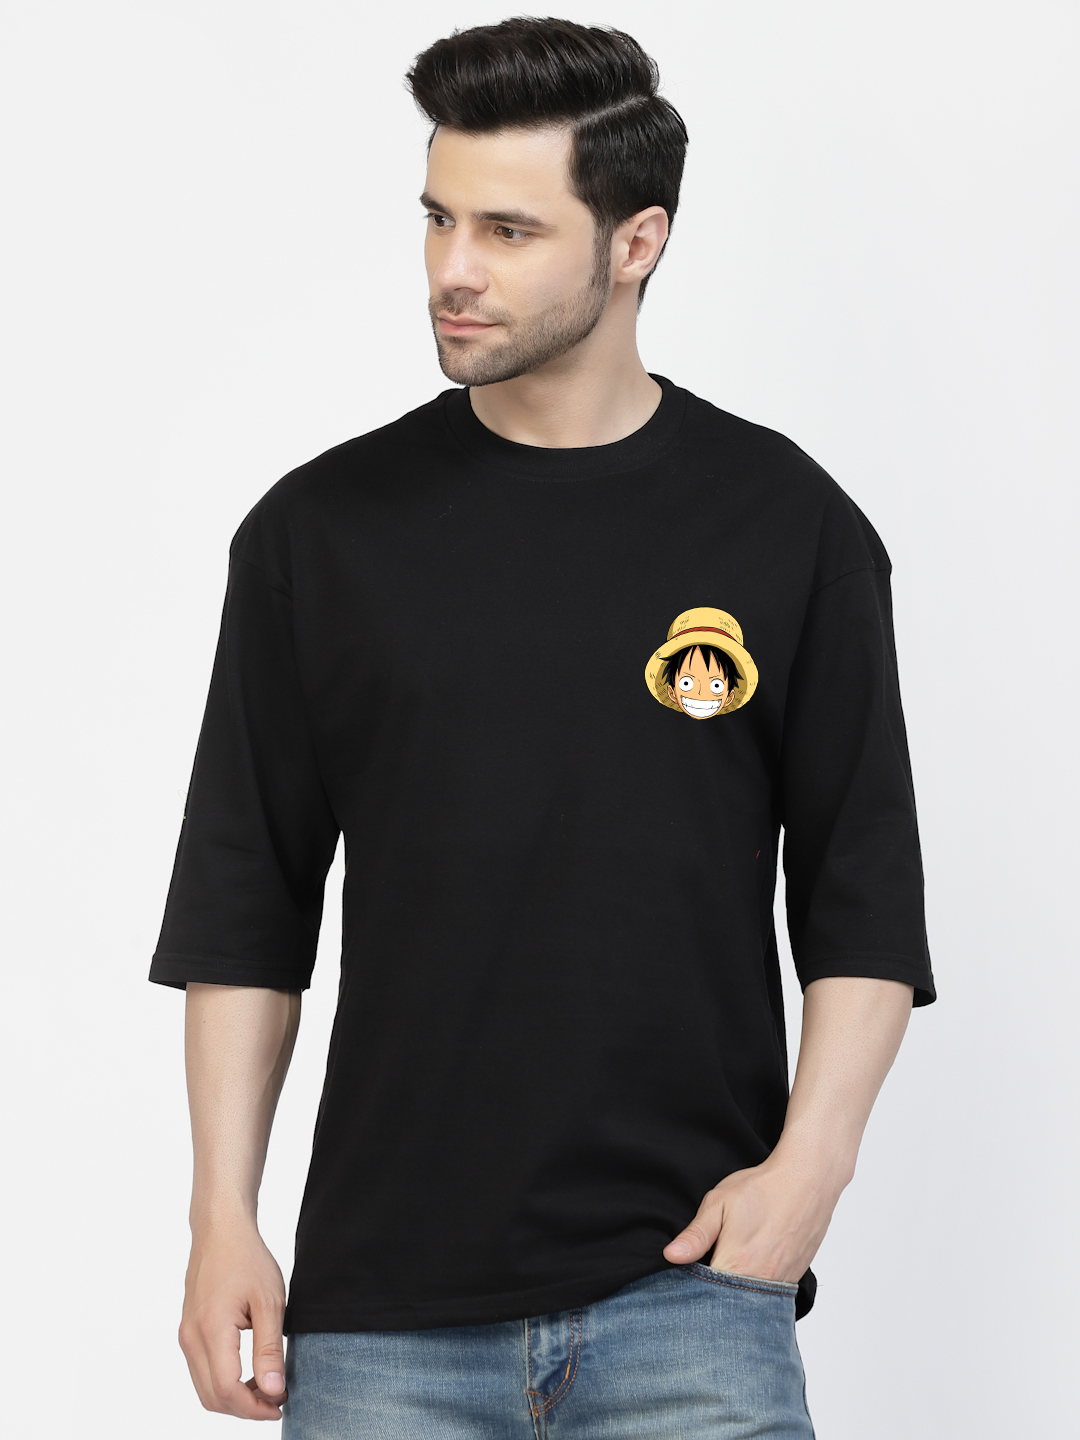 One Piece Both Sides Black Oversized T-shirt